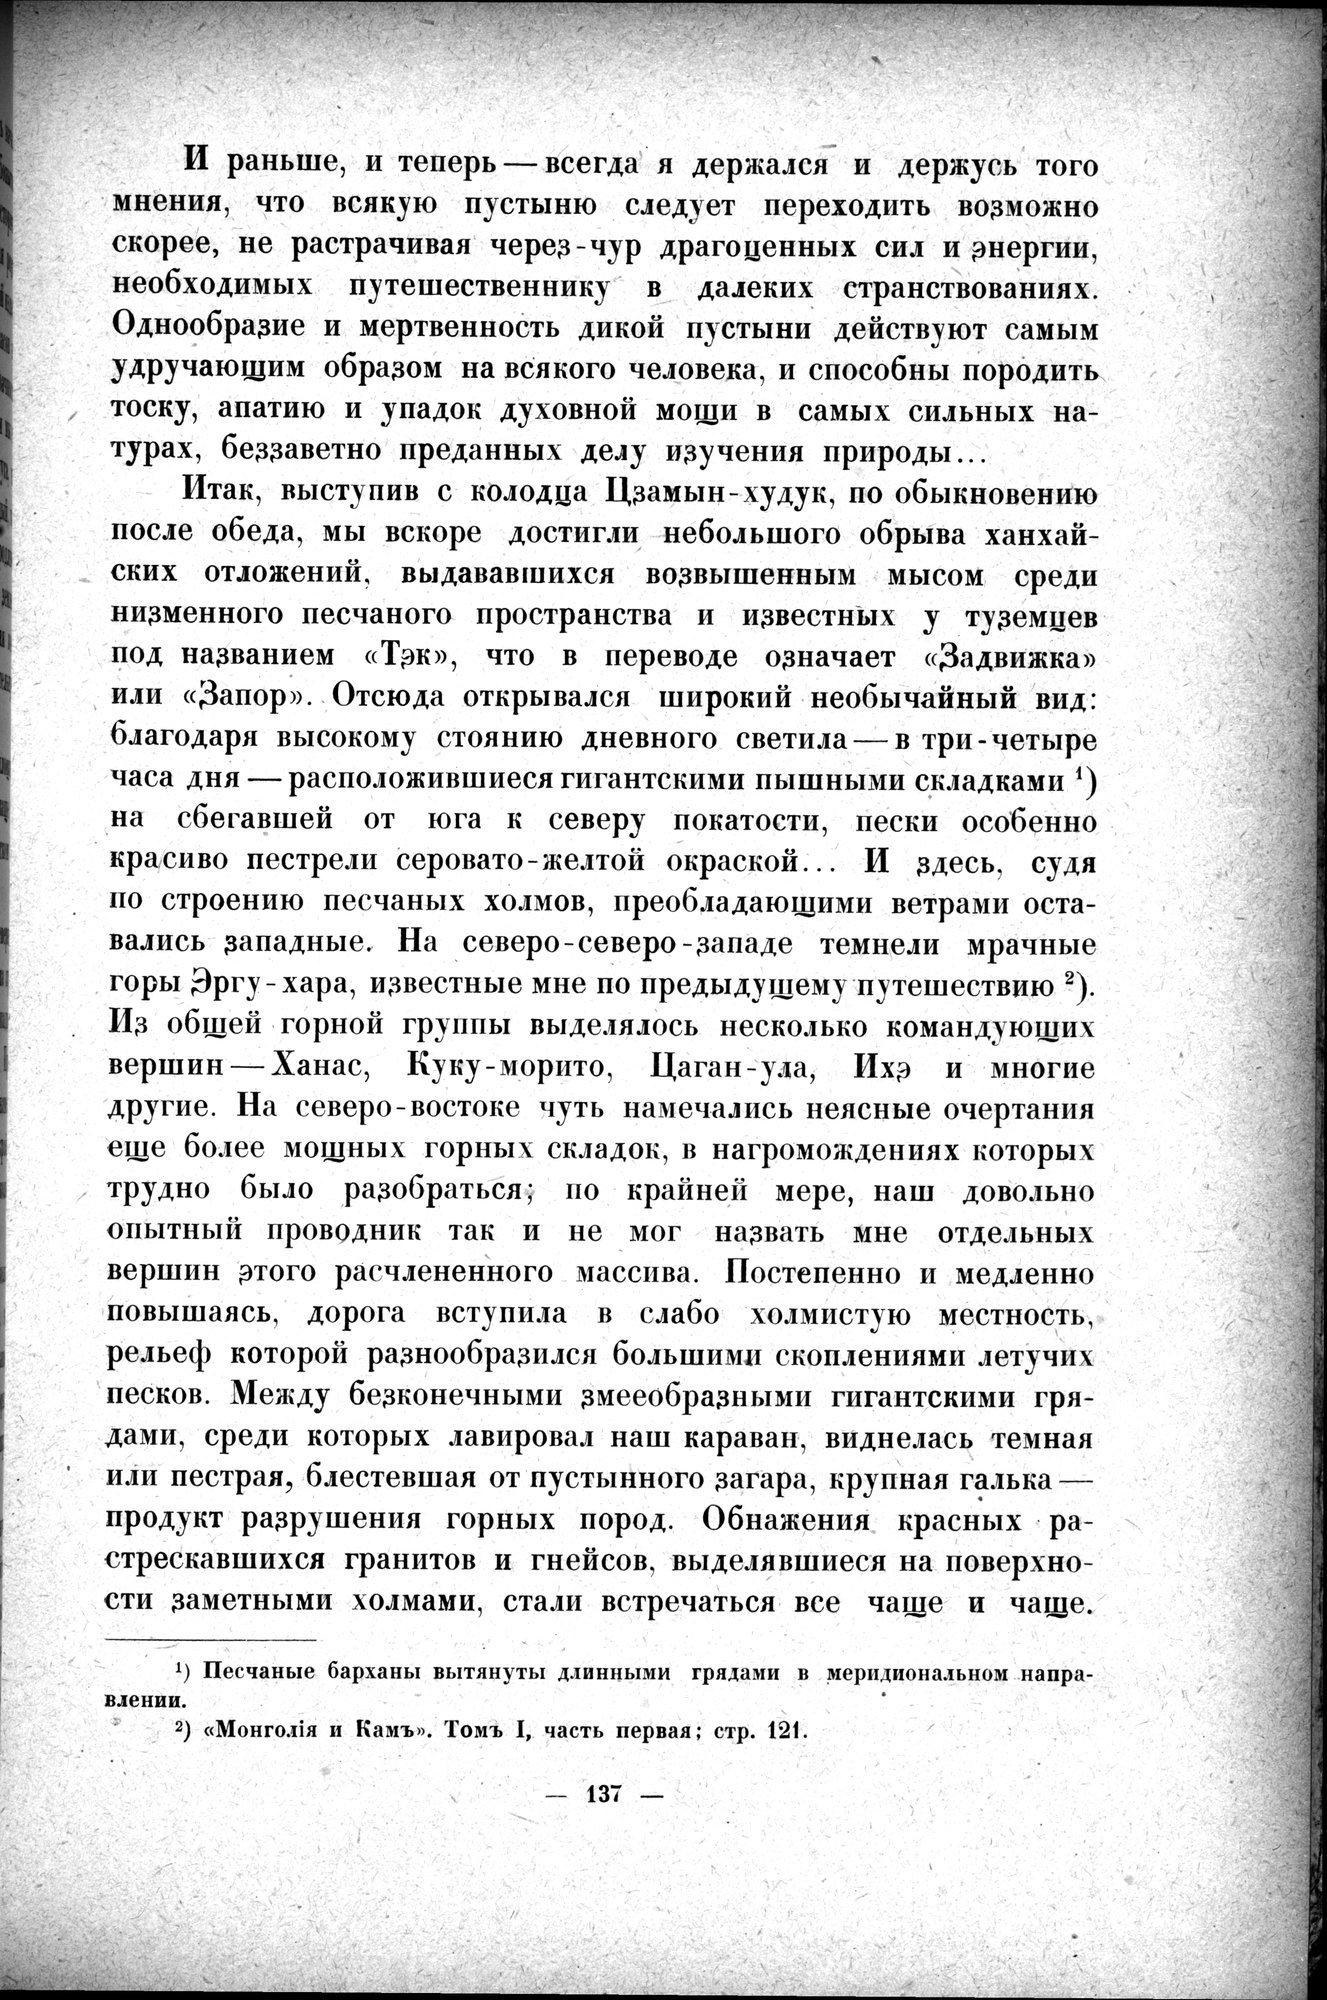 Mongoliya i Amdo i mertby gorod Khara-Khoto : vol.1 / Page 165 (Grayscale High Resolution Image)